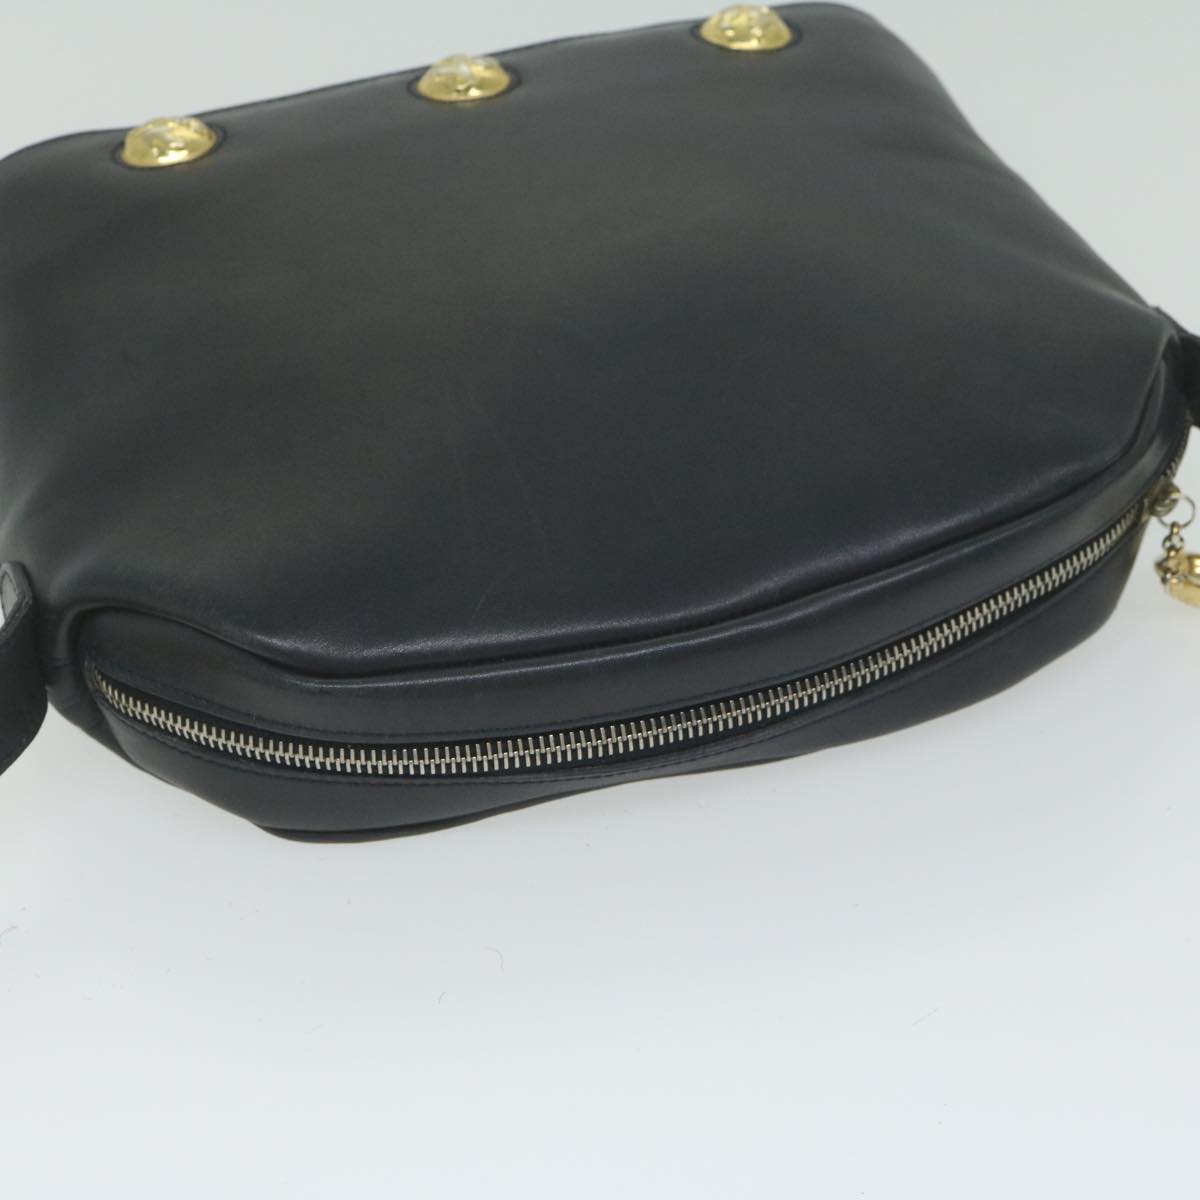 Salvatore Ferragamo Shoulder Bag Leather Navy Auth bs11006